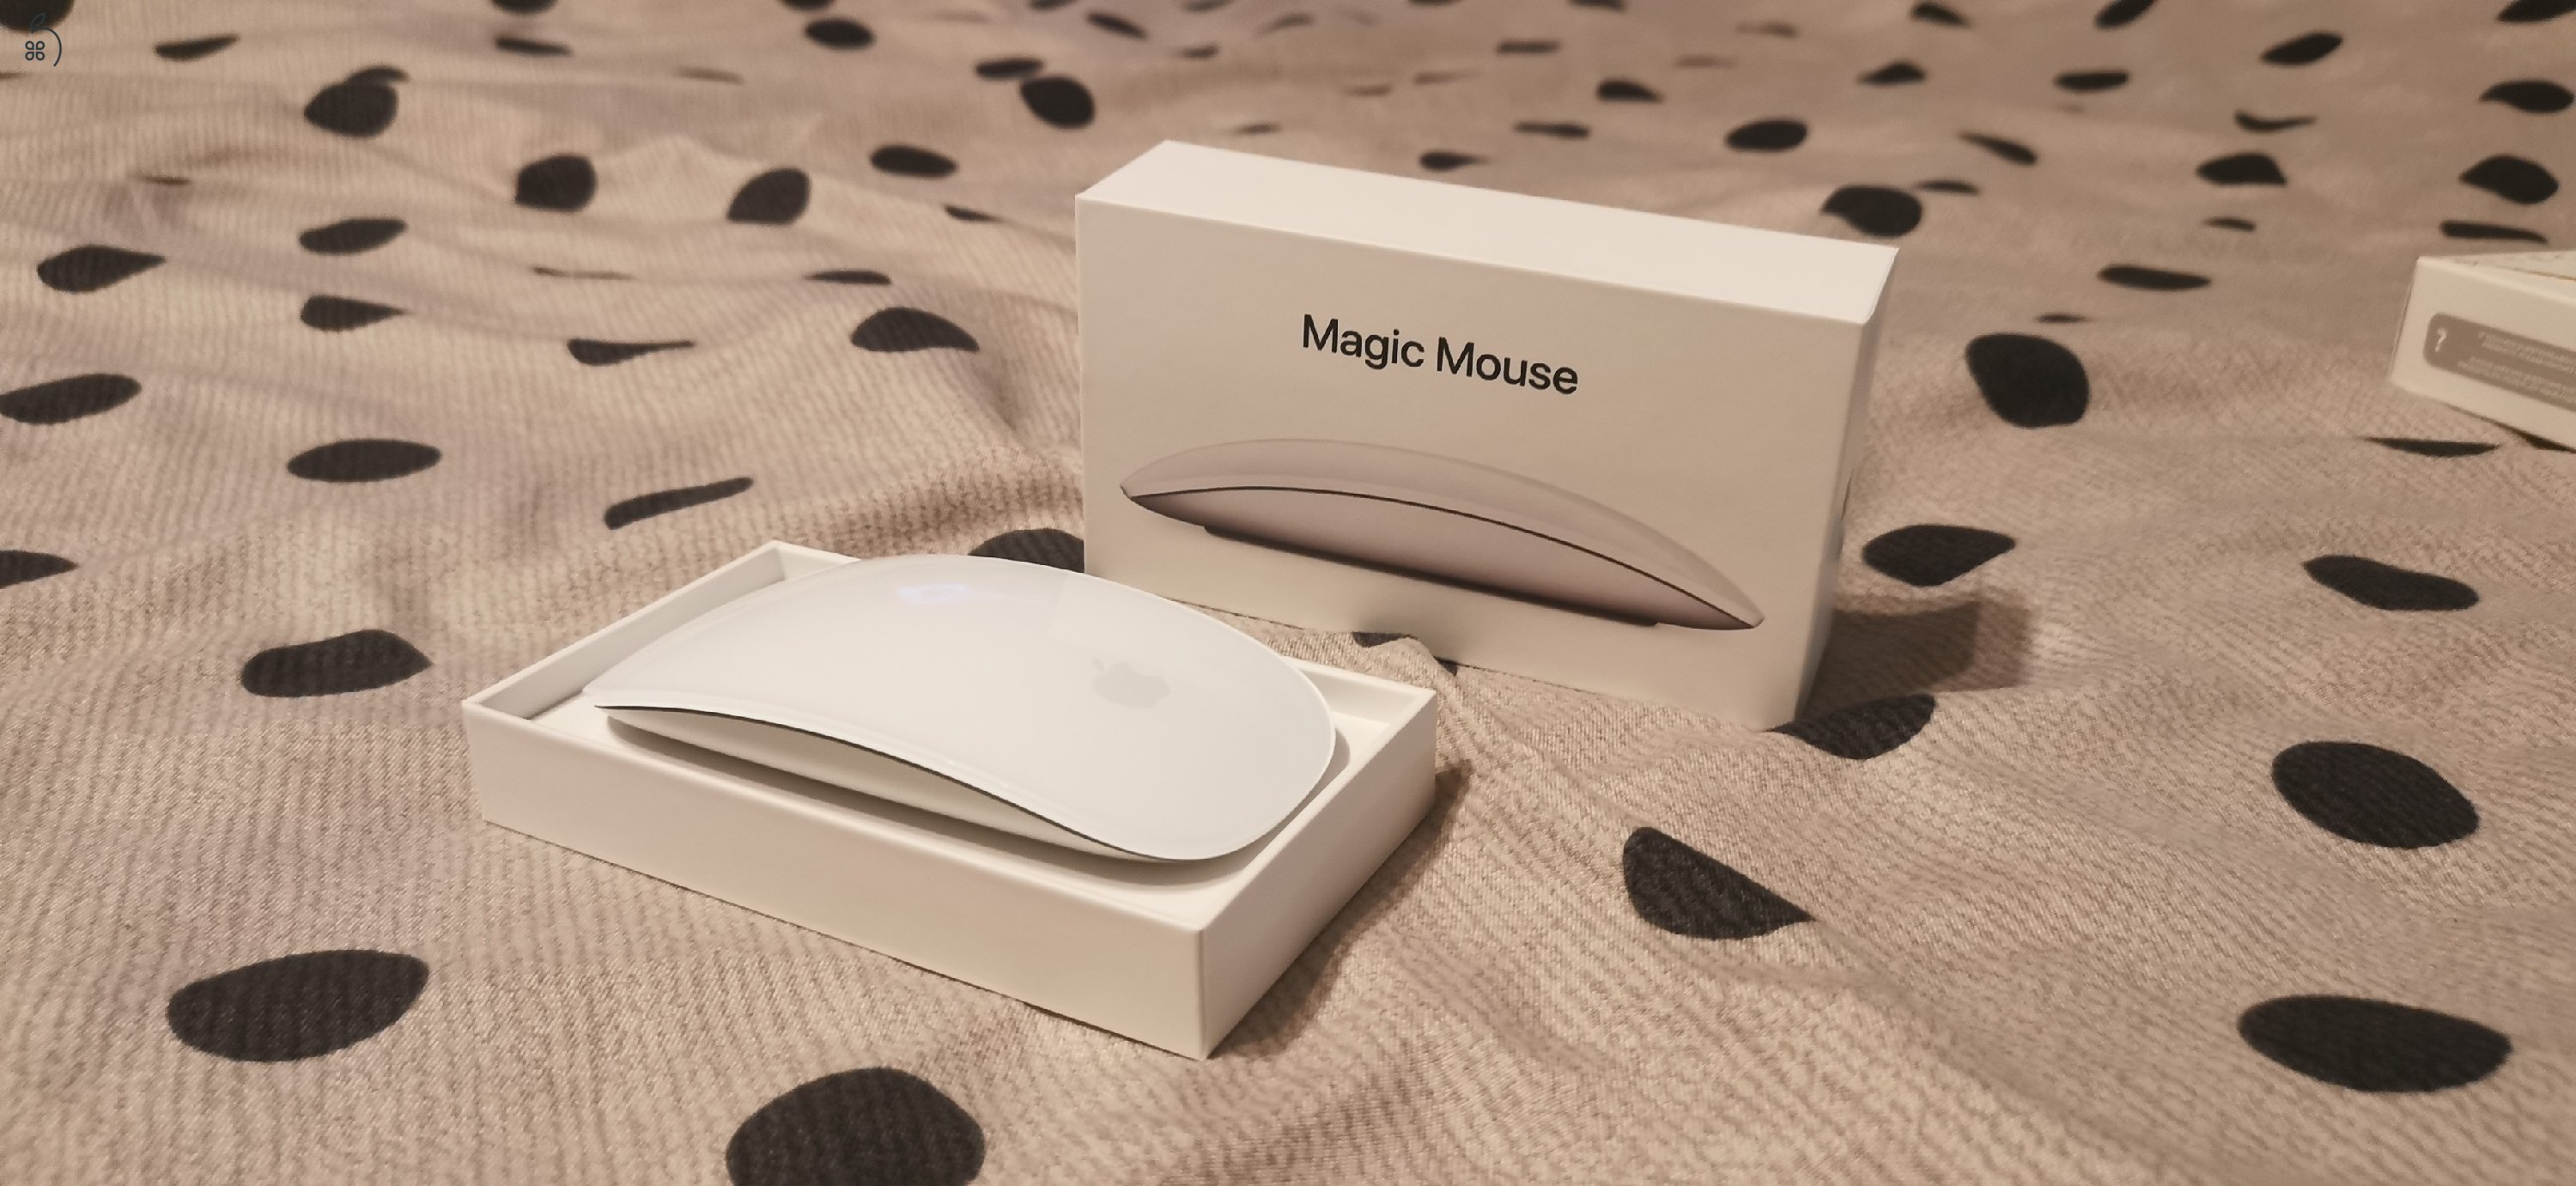 Magic Mouse 3 (2021) + Solumics Case Eladó